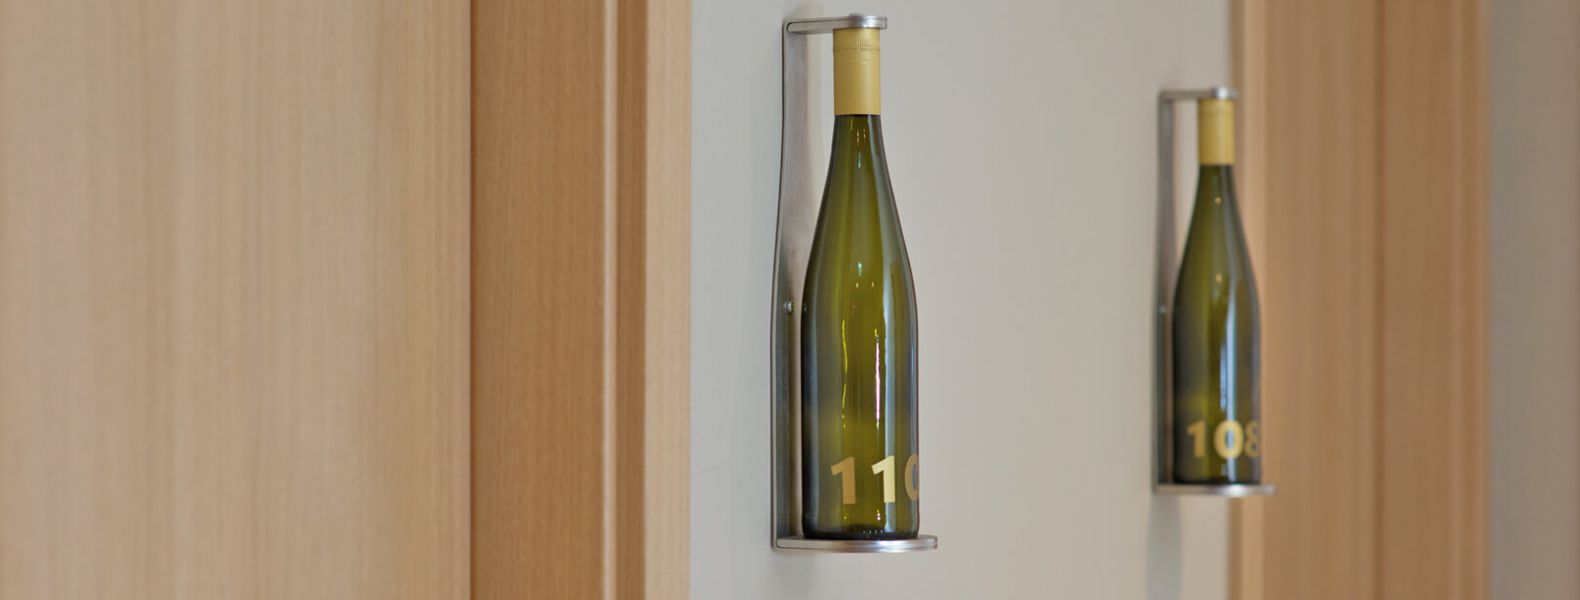 Wine bottles with room numbers in the Weinhotel Kaisergarten